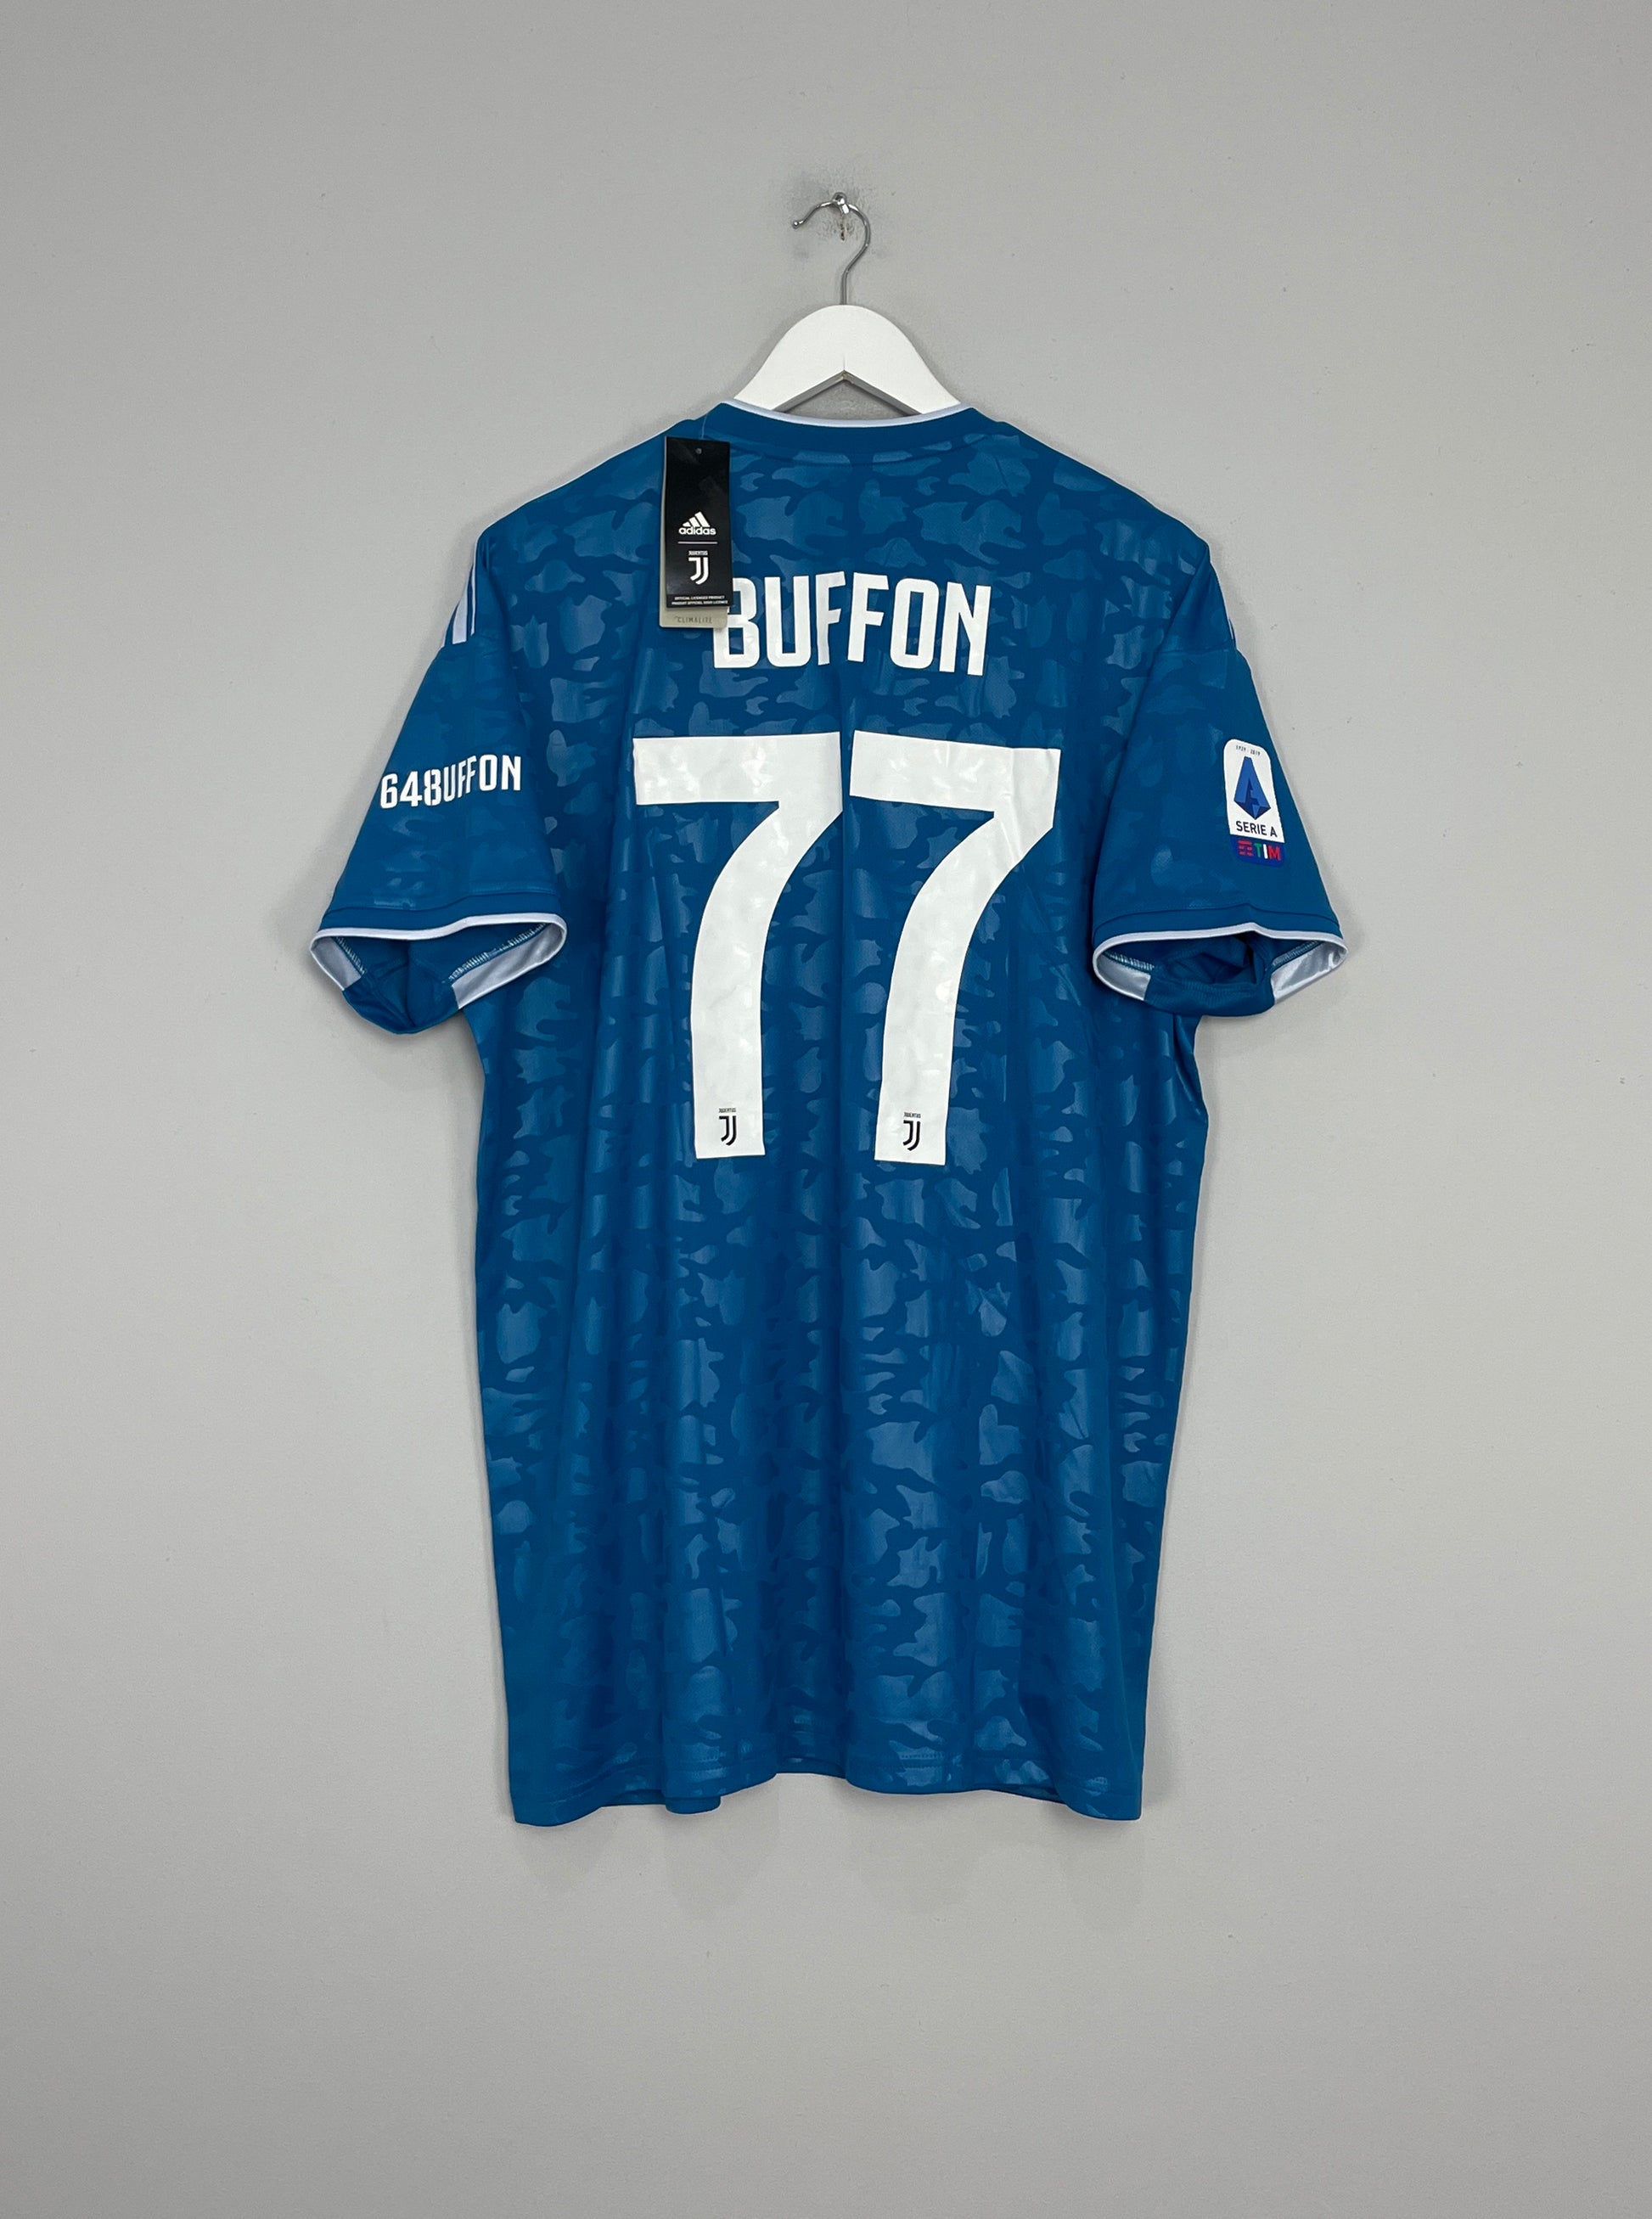 Image of the Juventus Buffon shirt from the 2019/20 season